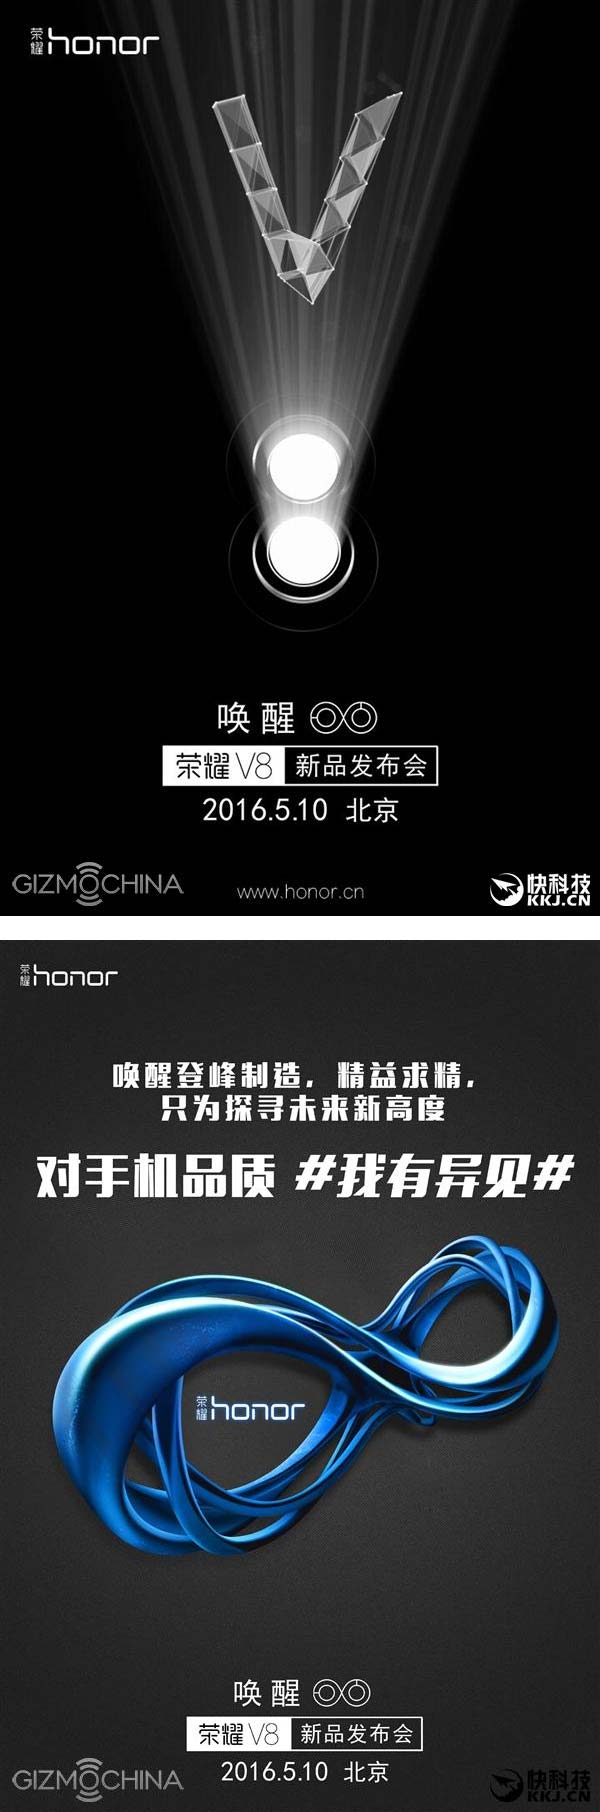 Тизеры Huawei Honor V8